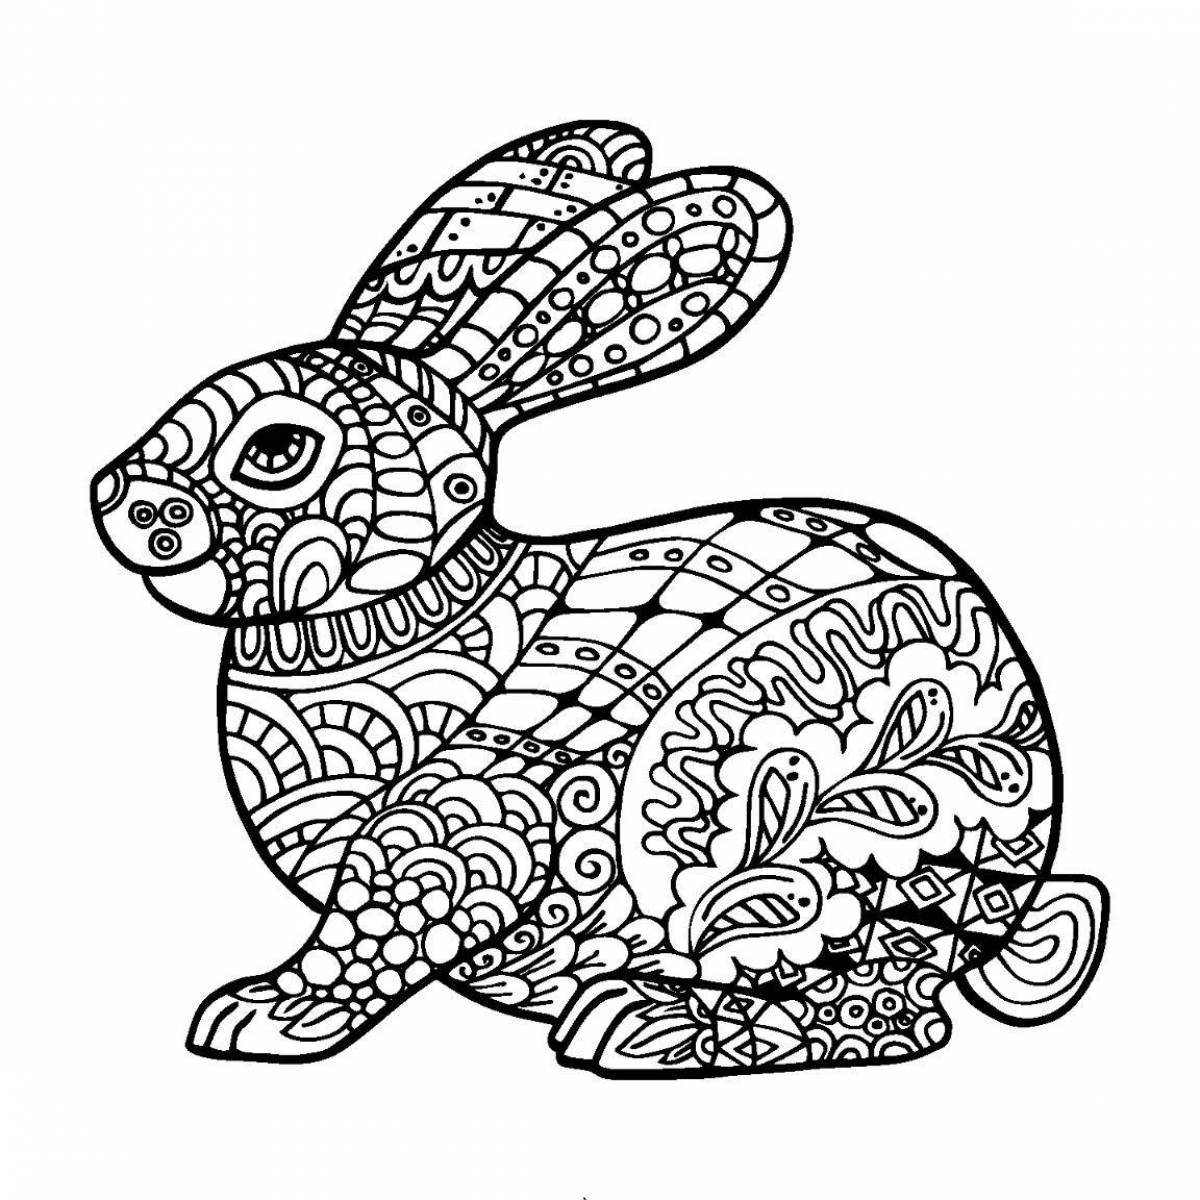 Joyful coloring bunny antistress